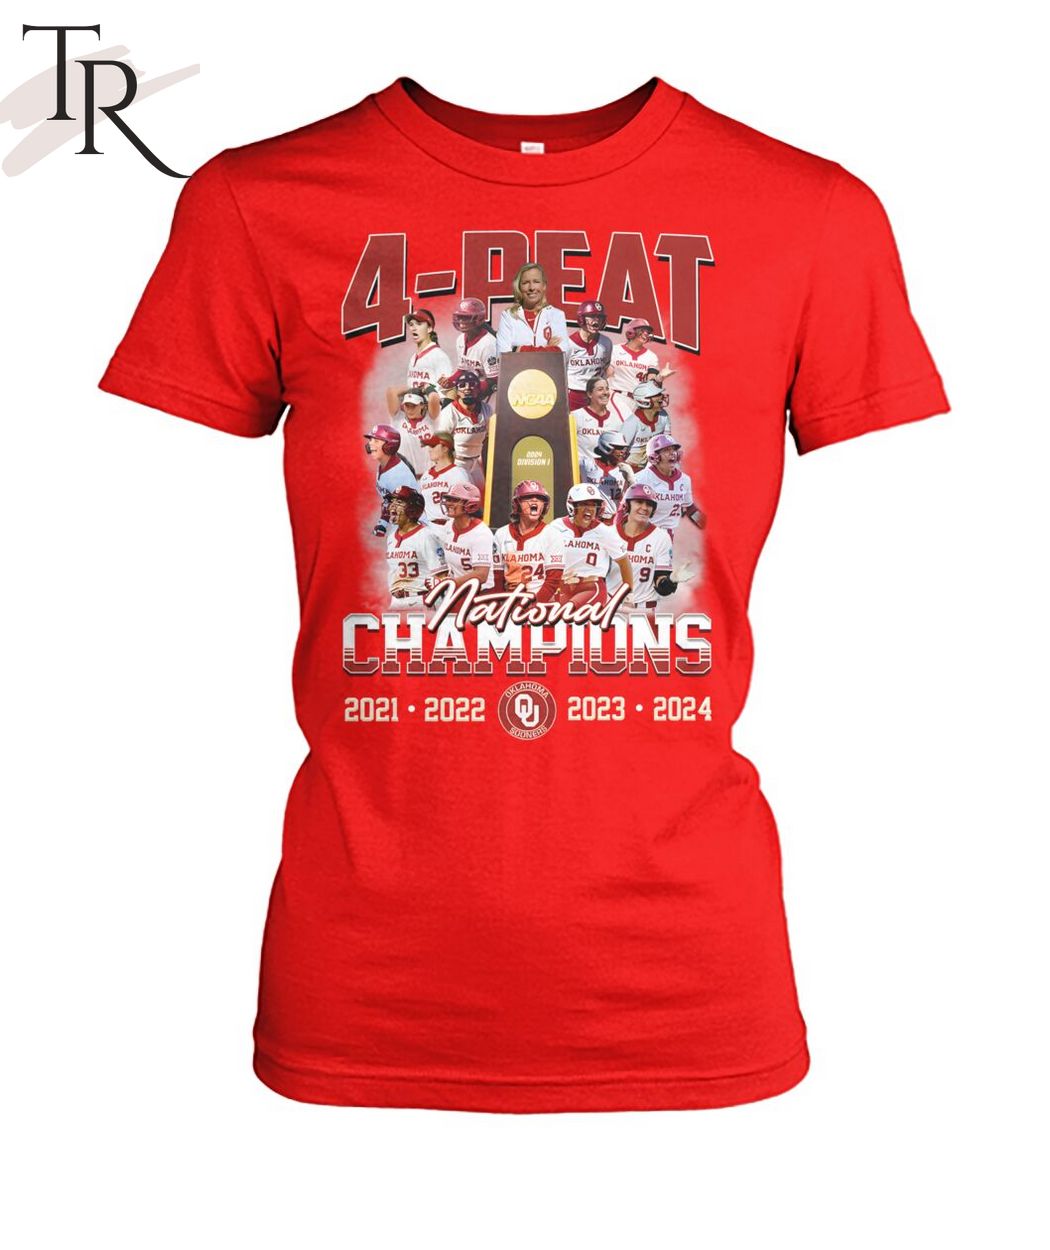 Oklahoma Sooners 4-Peat National Champions 2021 2022 2023 2024 T-Shirt